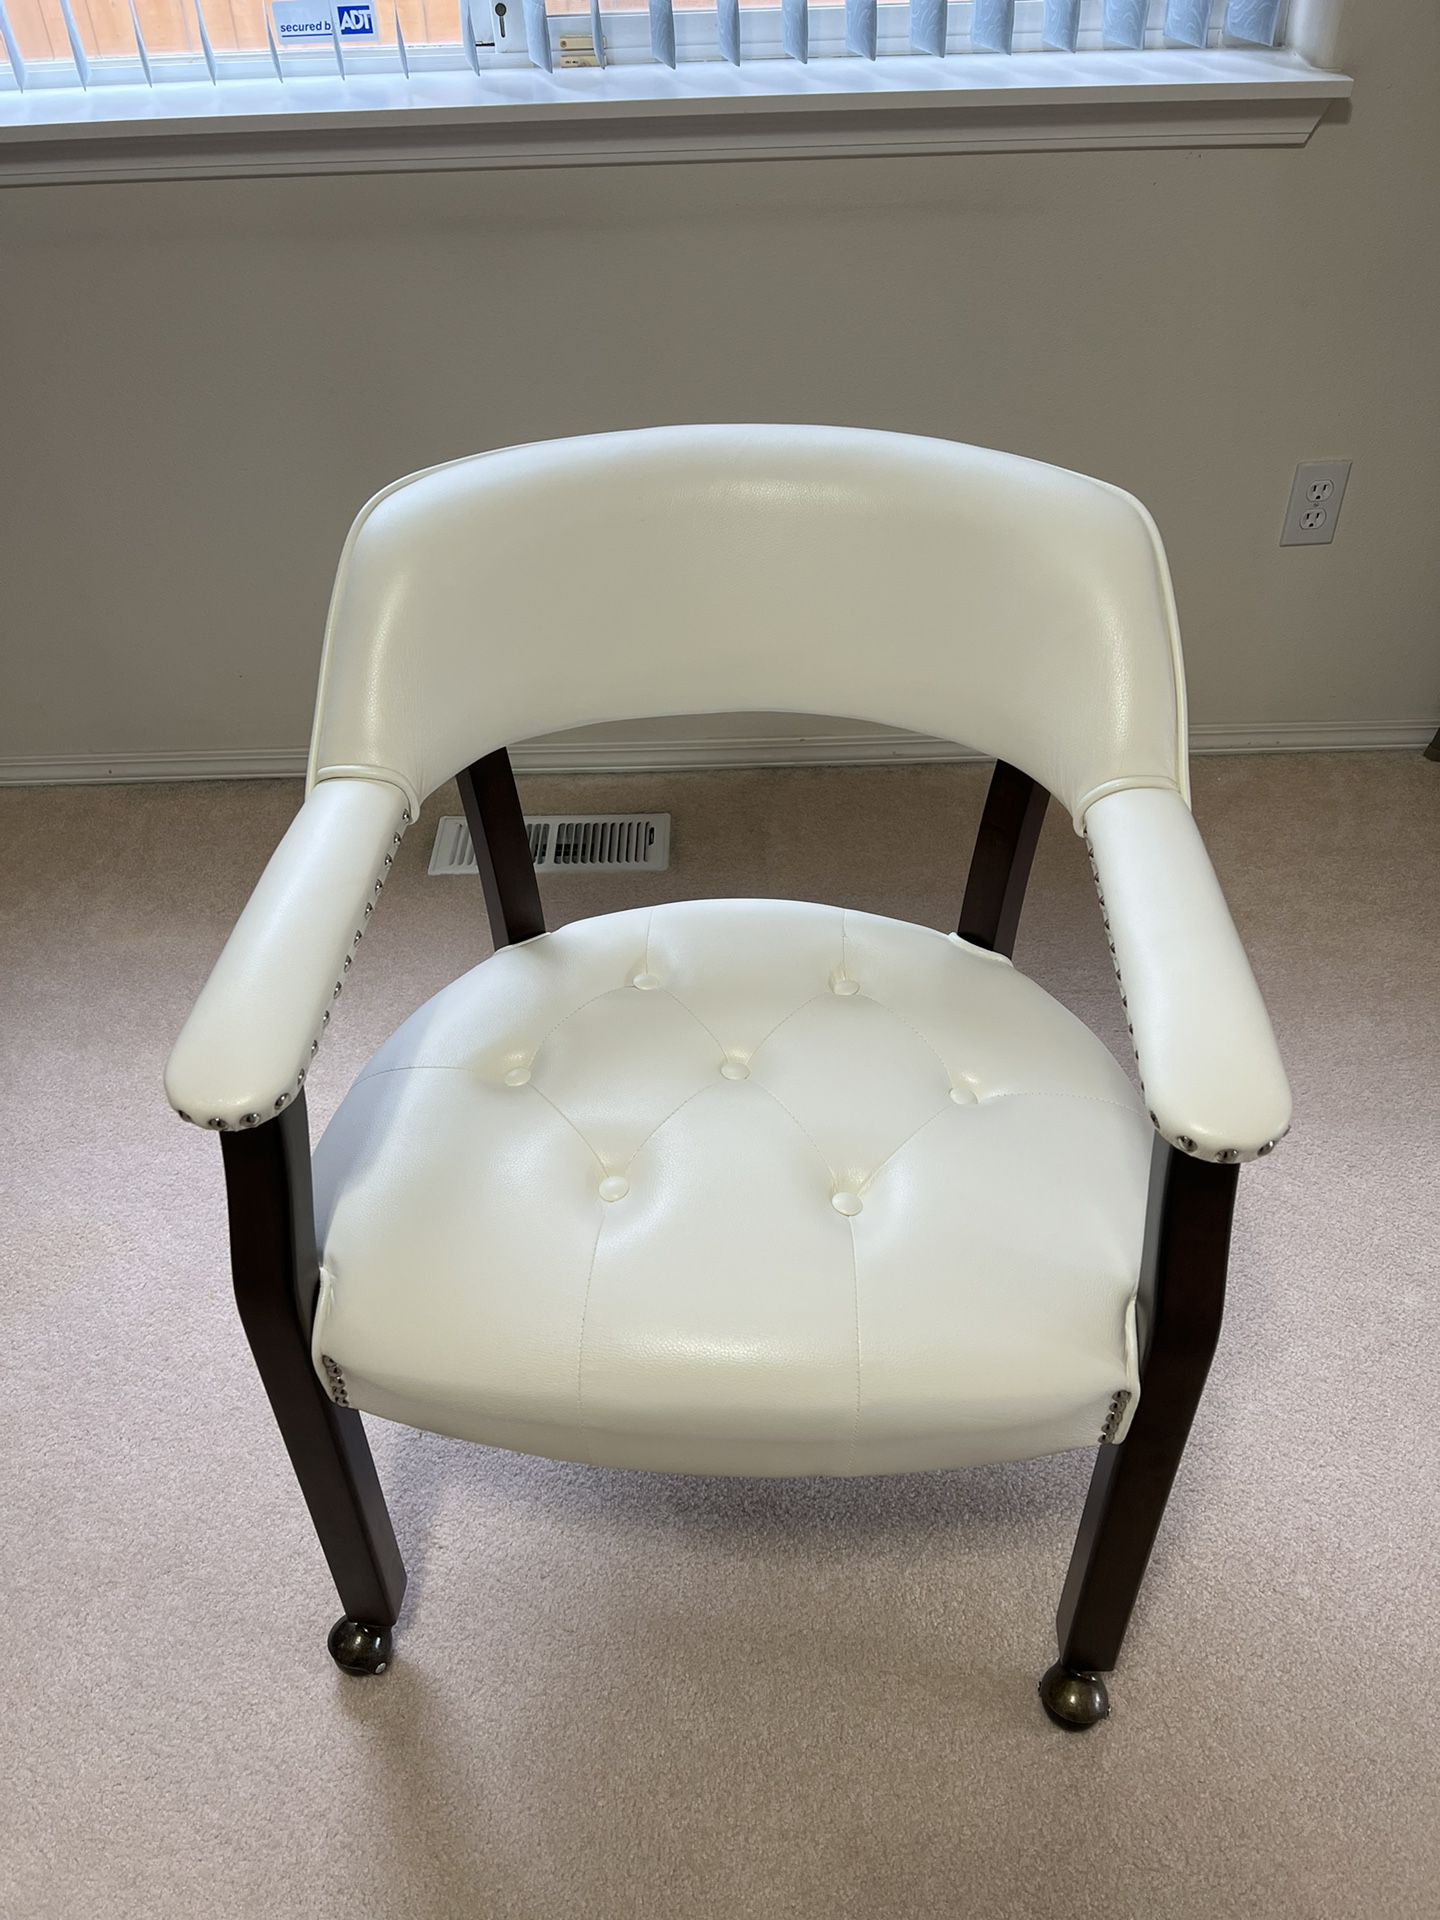 Brand new Amazon JESONVID Dining Chair